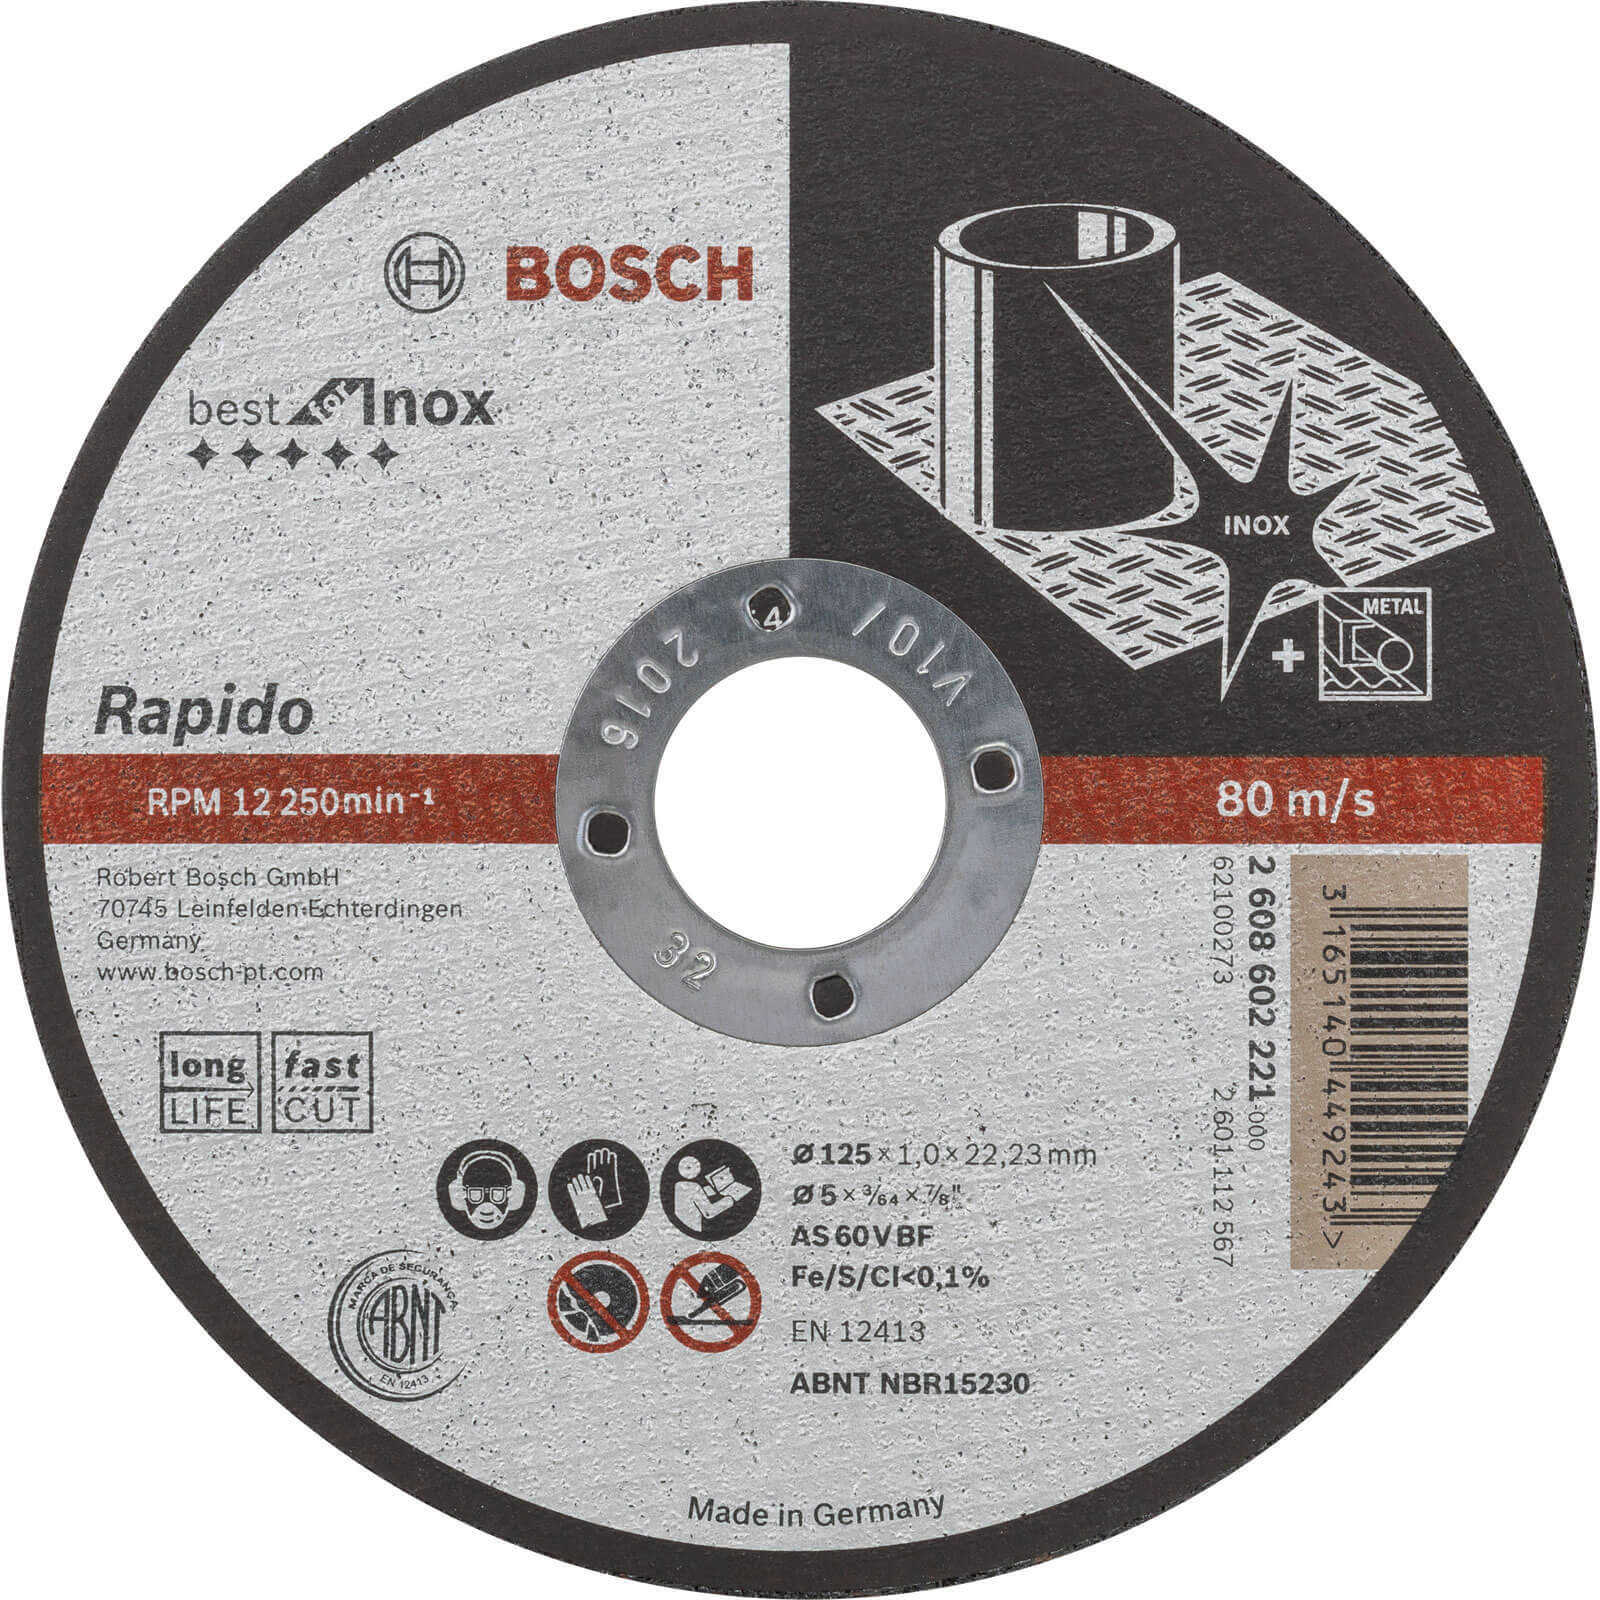 Image of Bosch Rapido Best Inox Cutting Disc 125mm 1mm 22mm